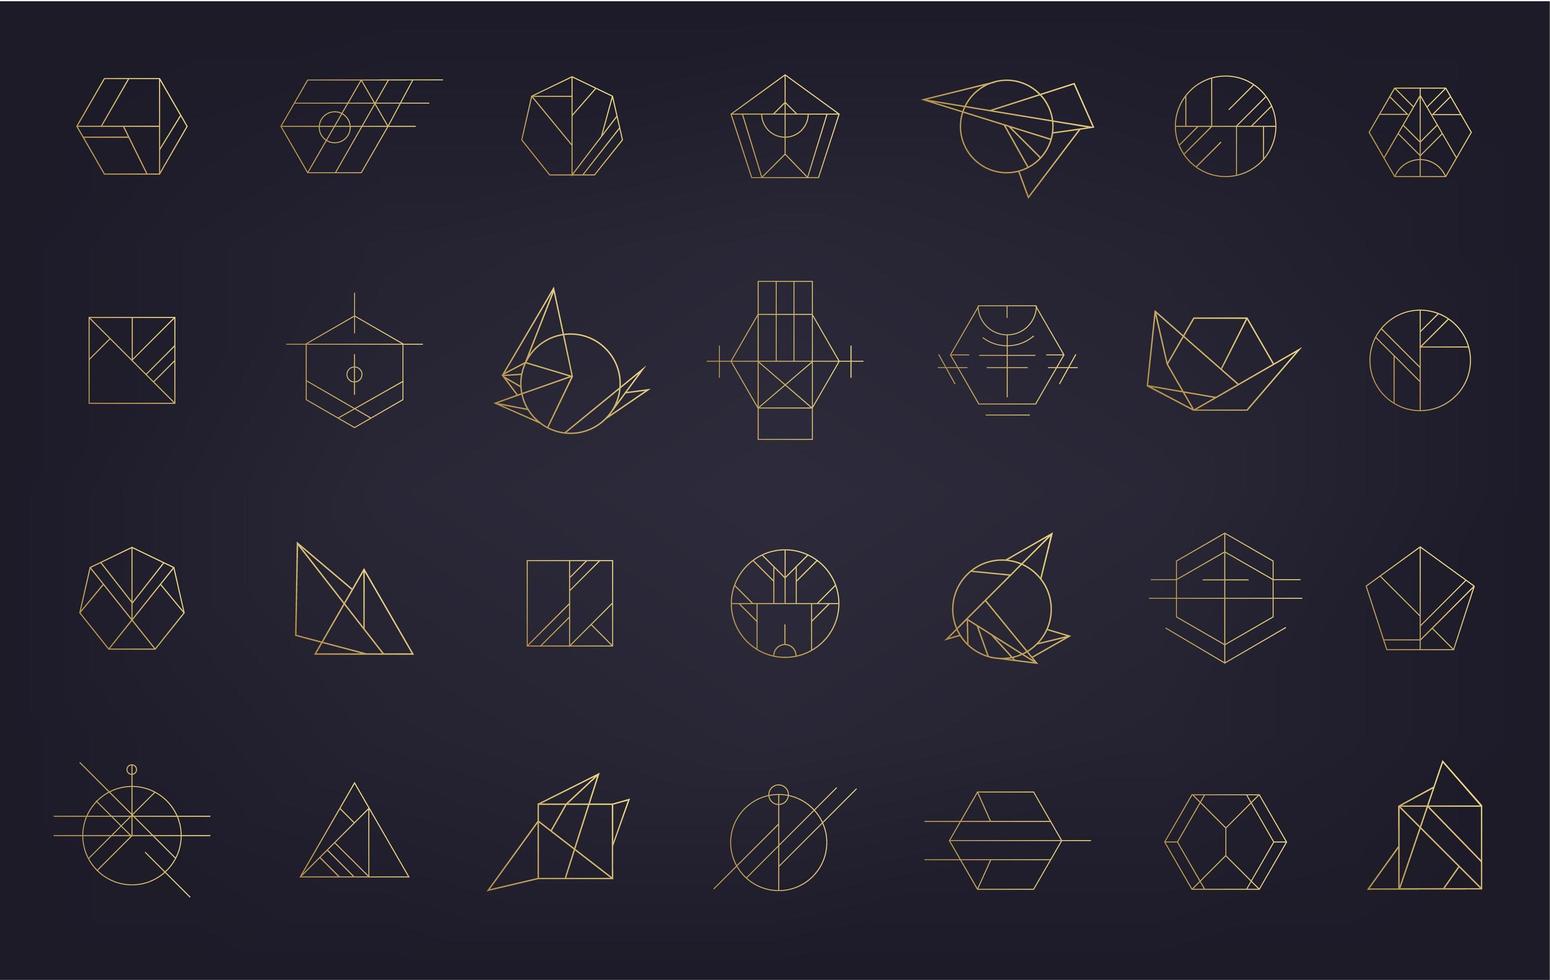 conjunto de vetores de logotipos geométricos abstratos. estilo art deco, hipster, linha dourada. círculo, triângulo, formas lineares de polígono. ícones astecas, mágicos e esotéricos